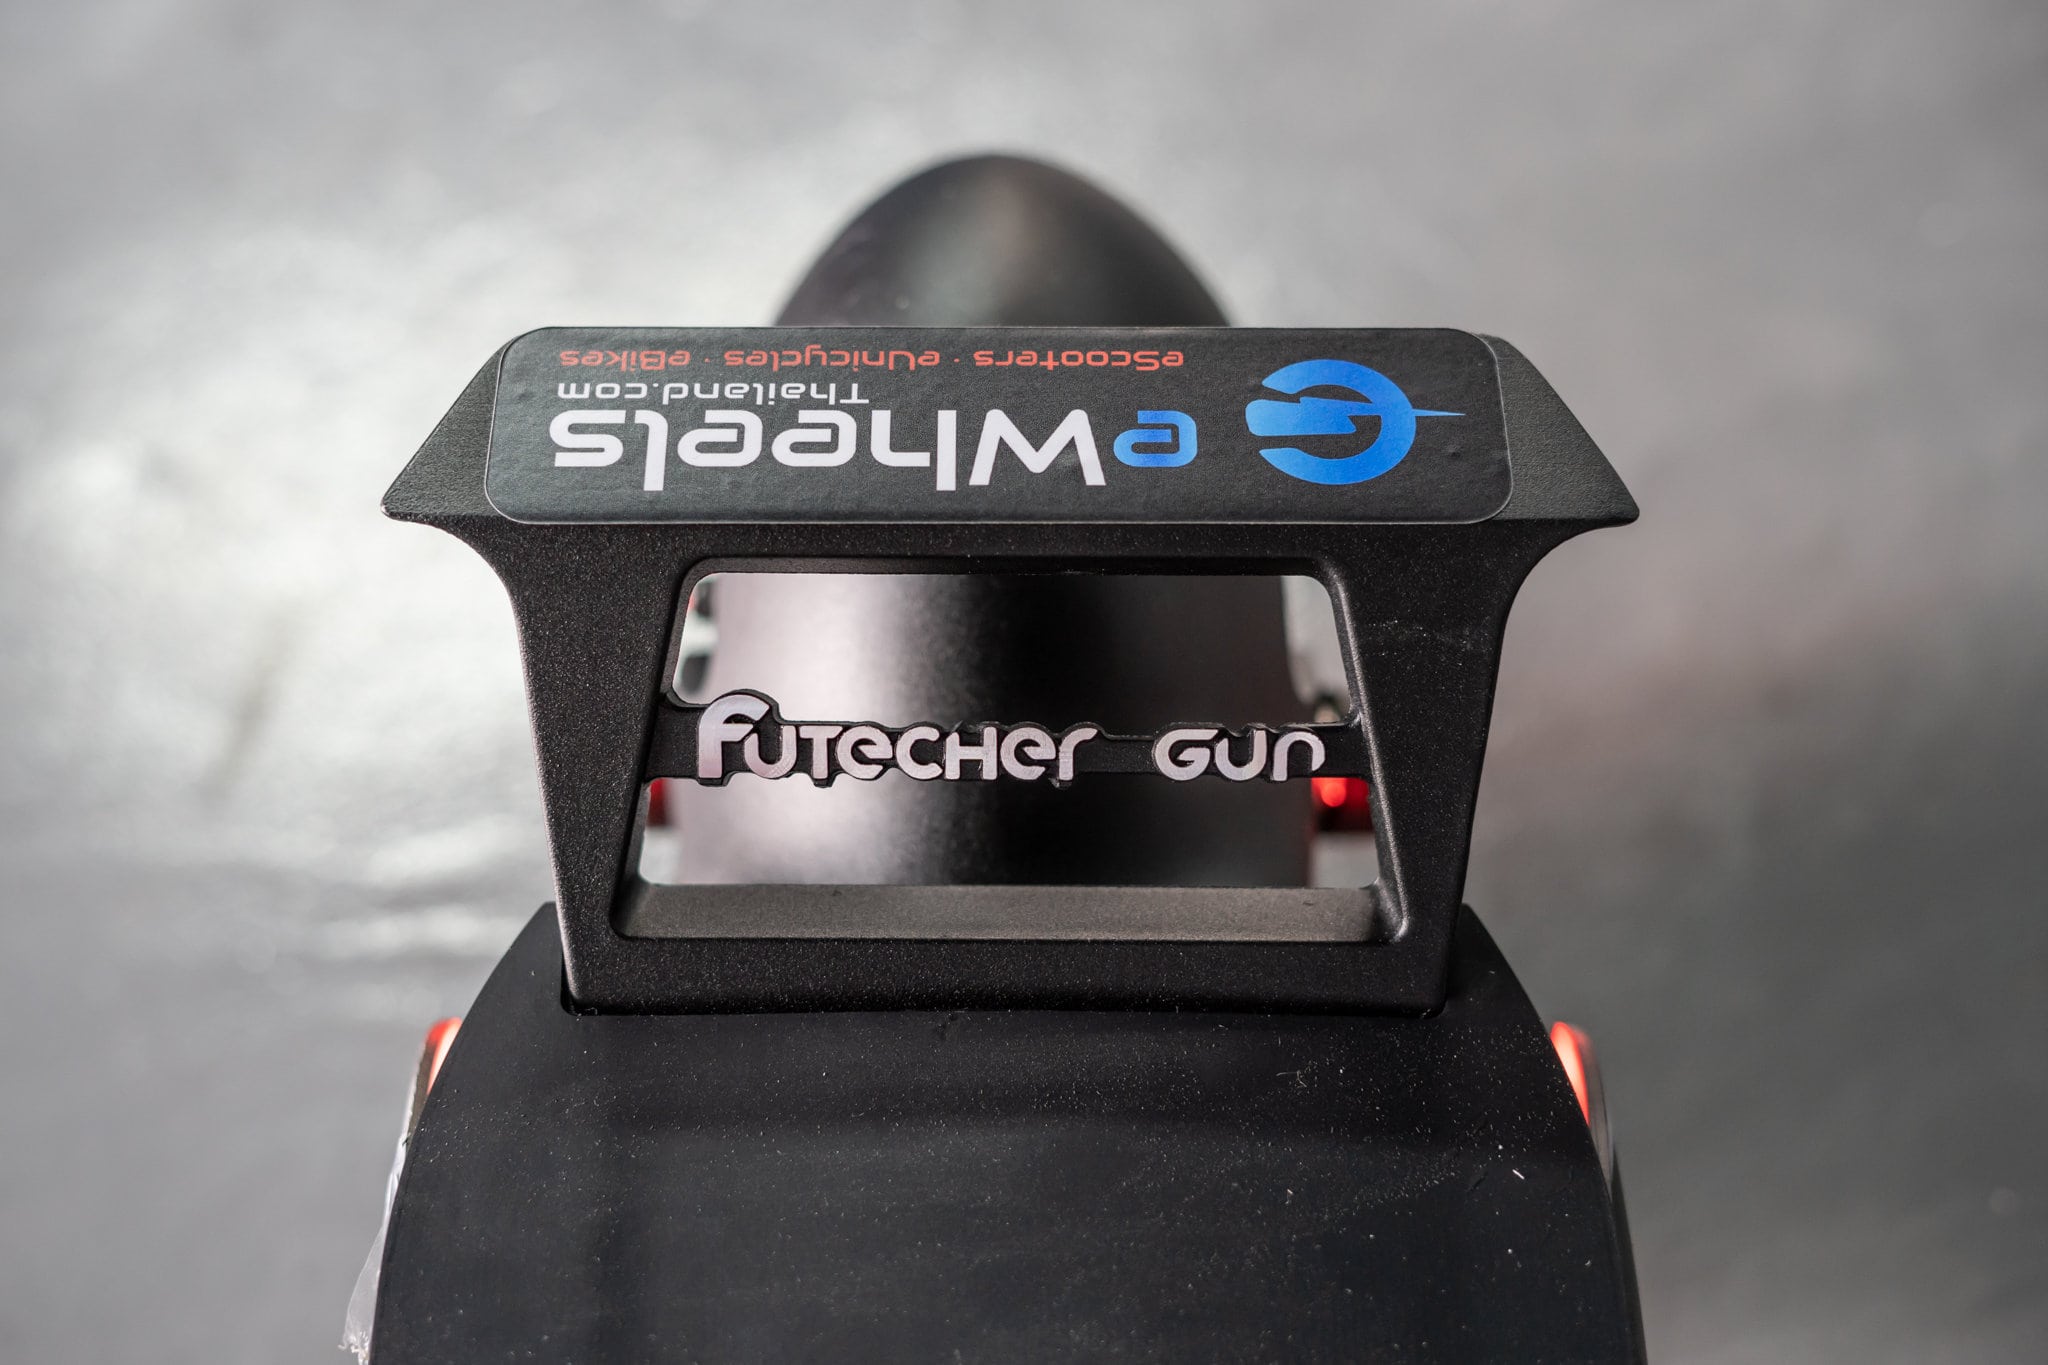 Futecher Gun electric scooter - สกู๊ตเตอร์ไฟฟ้า